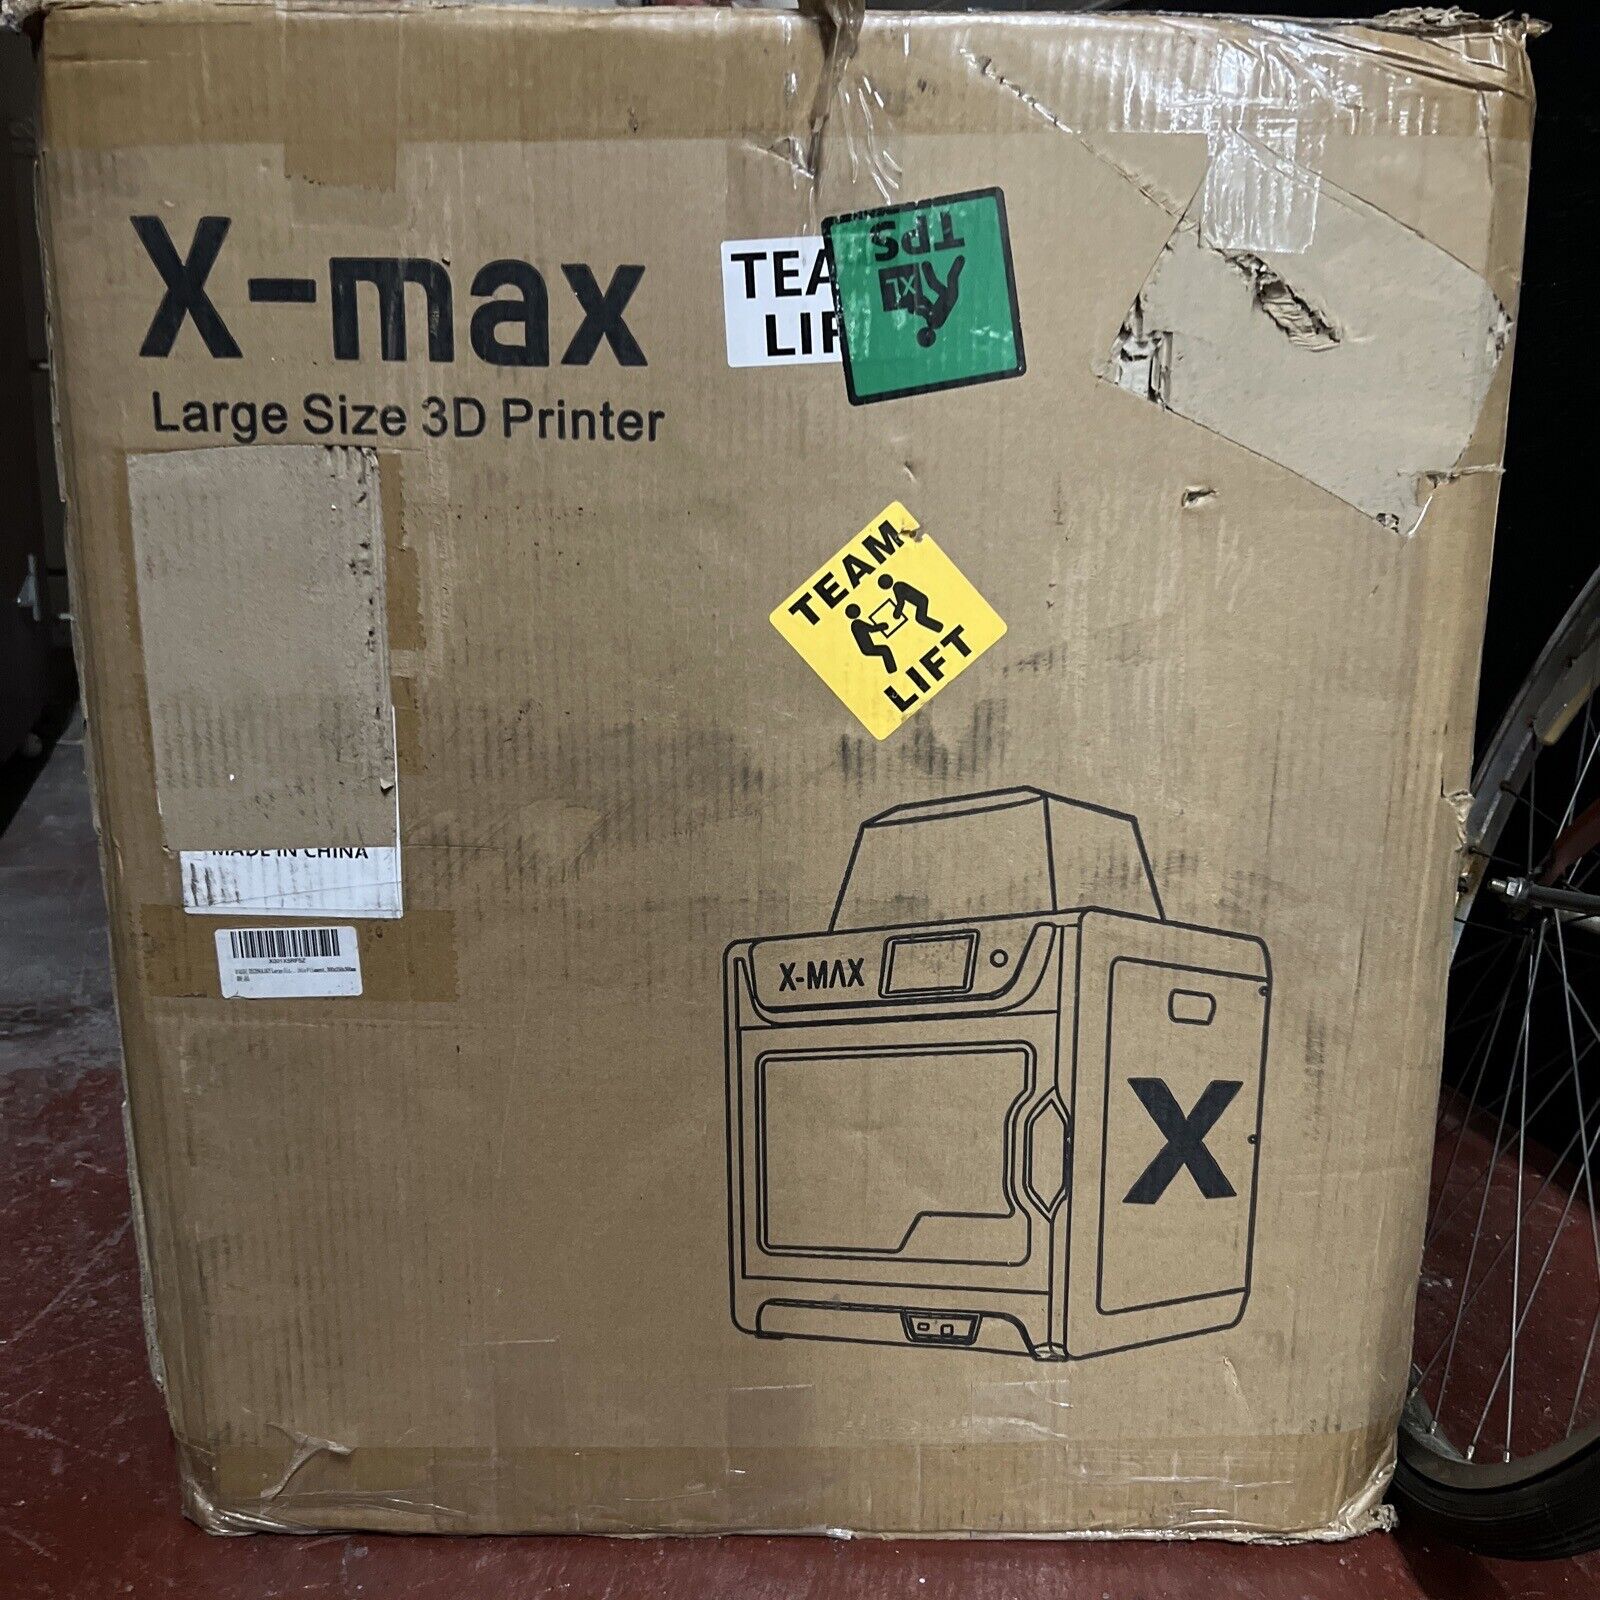 QIDI TECH X-MAX Large Size 3D Printer - Open Box